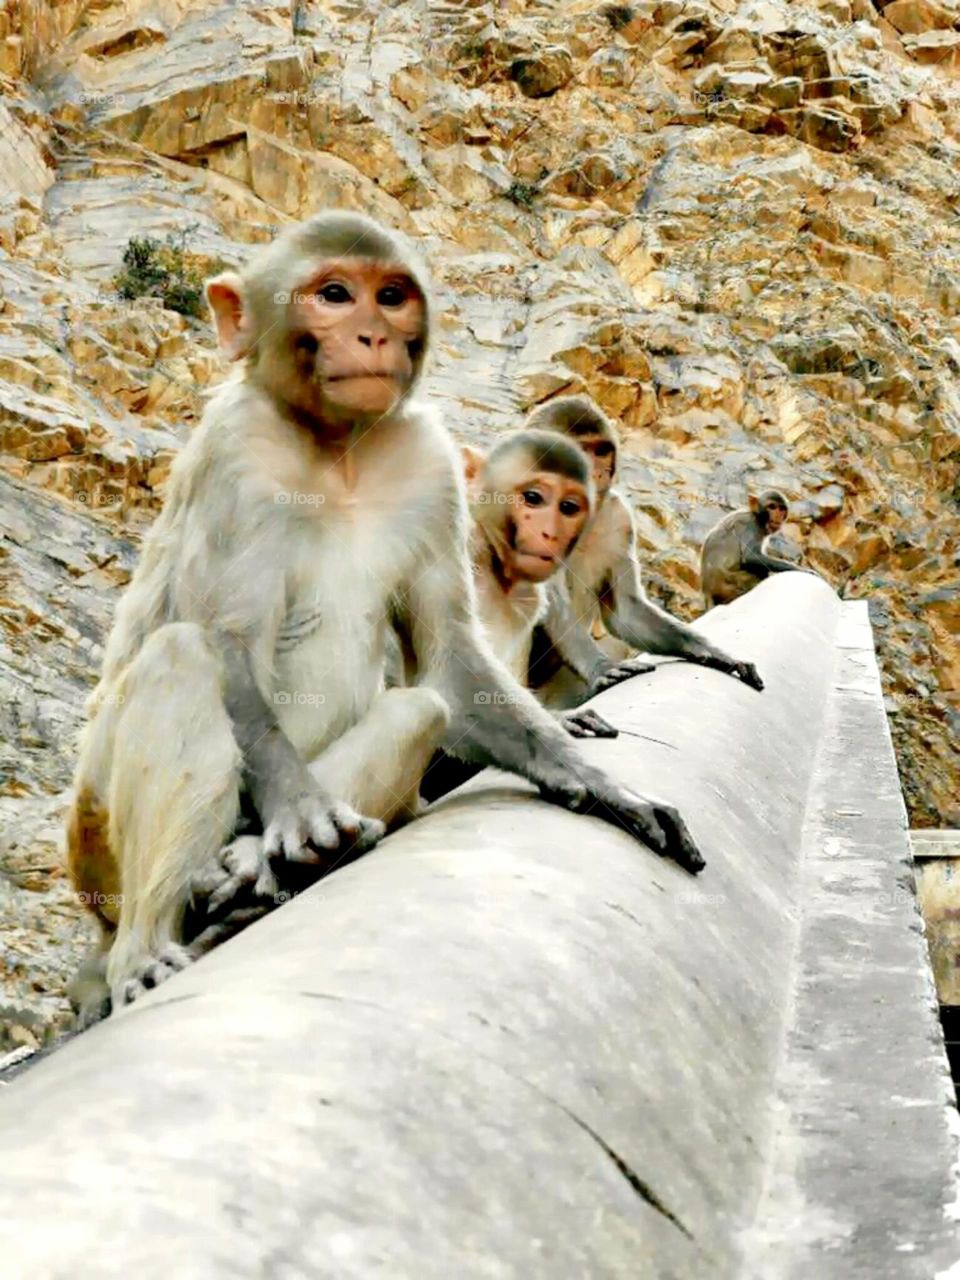 monos de la india